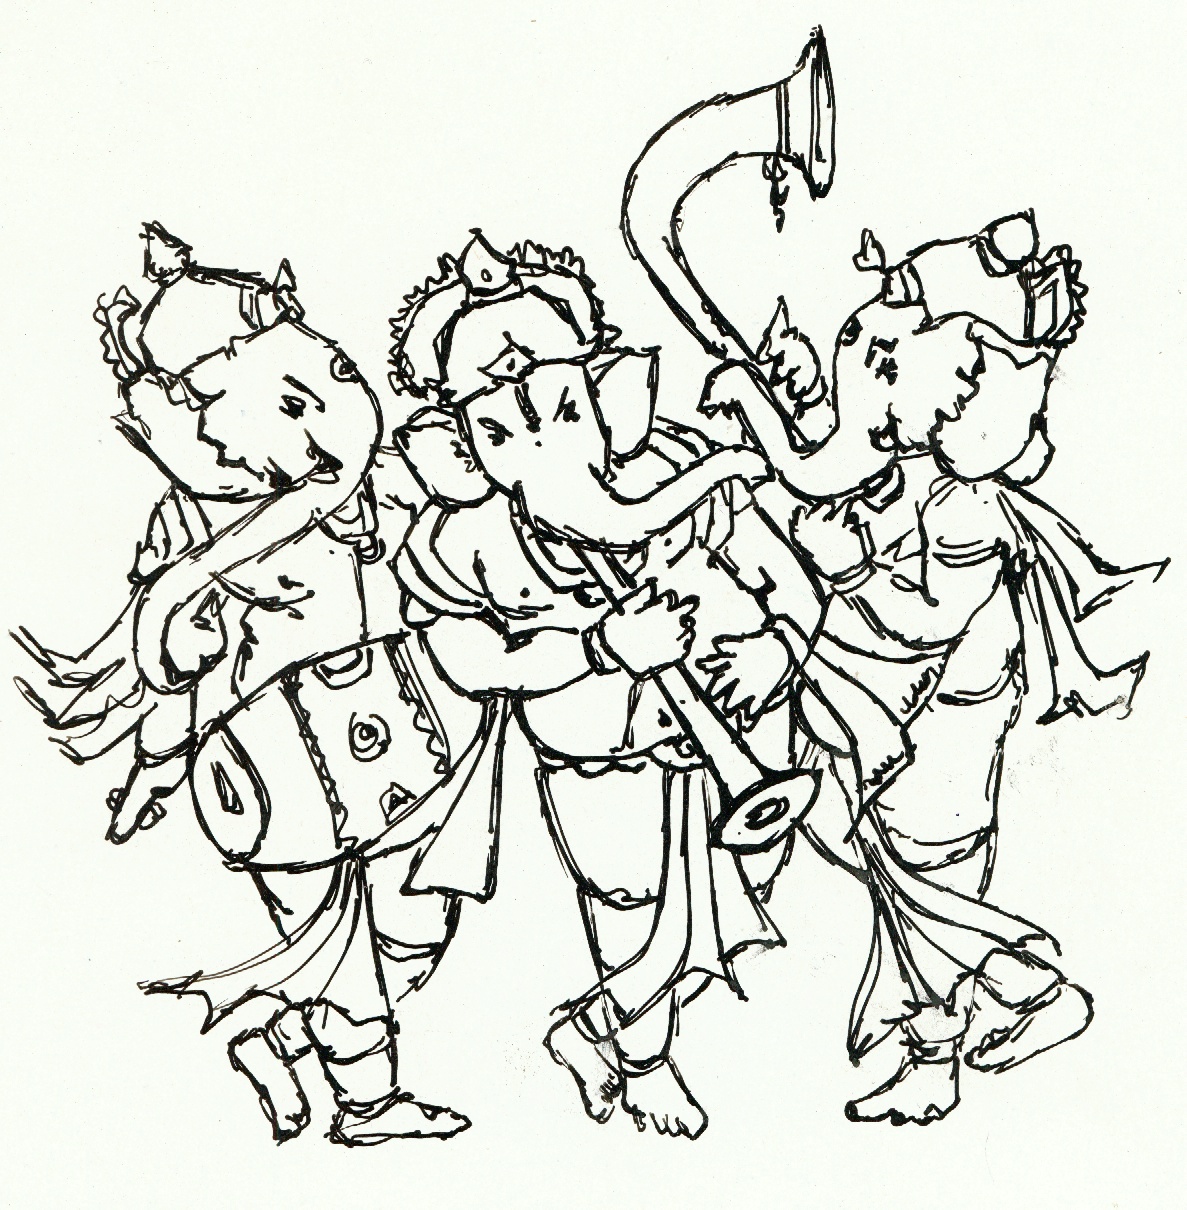 Ganesh chaturthi drawing easy | ganesha drawing easy | How to draw ganesha  easy step by step | By All About ArtFacebook